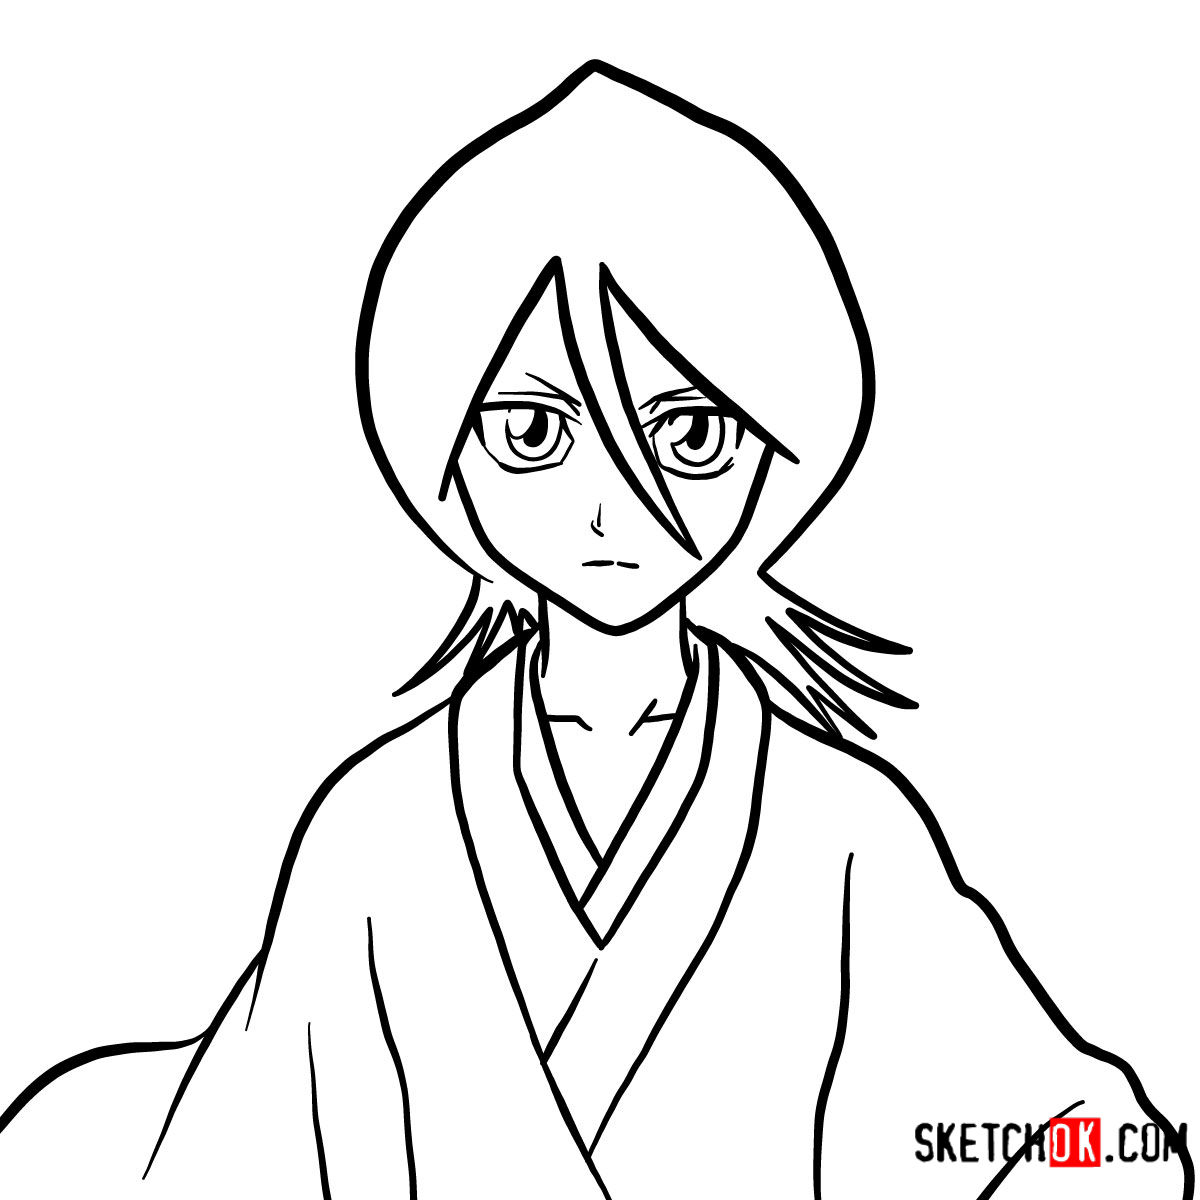 How to draw Rukia Kuchiki face | Bleach